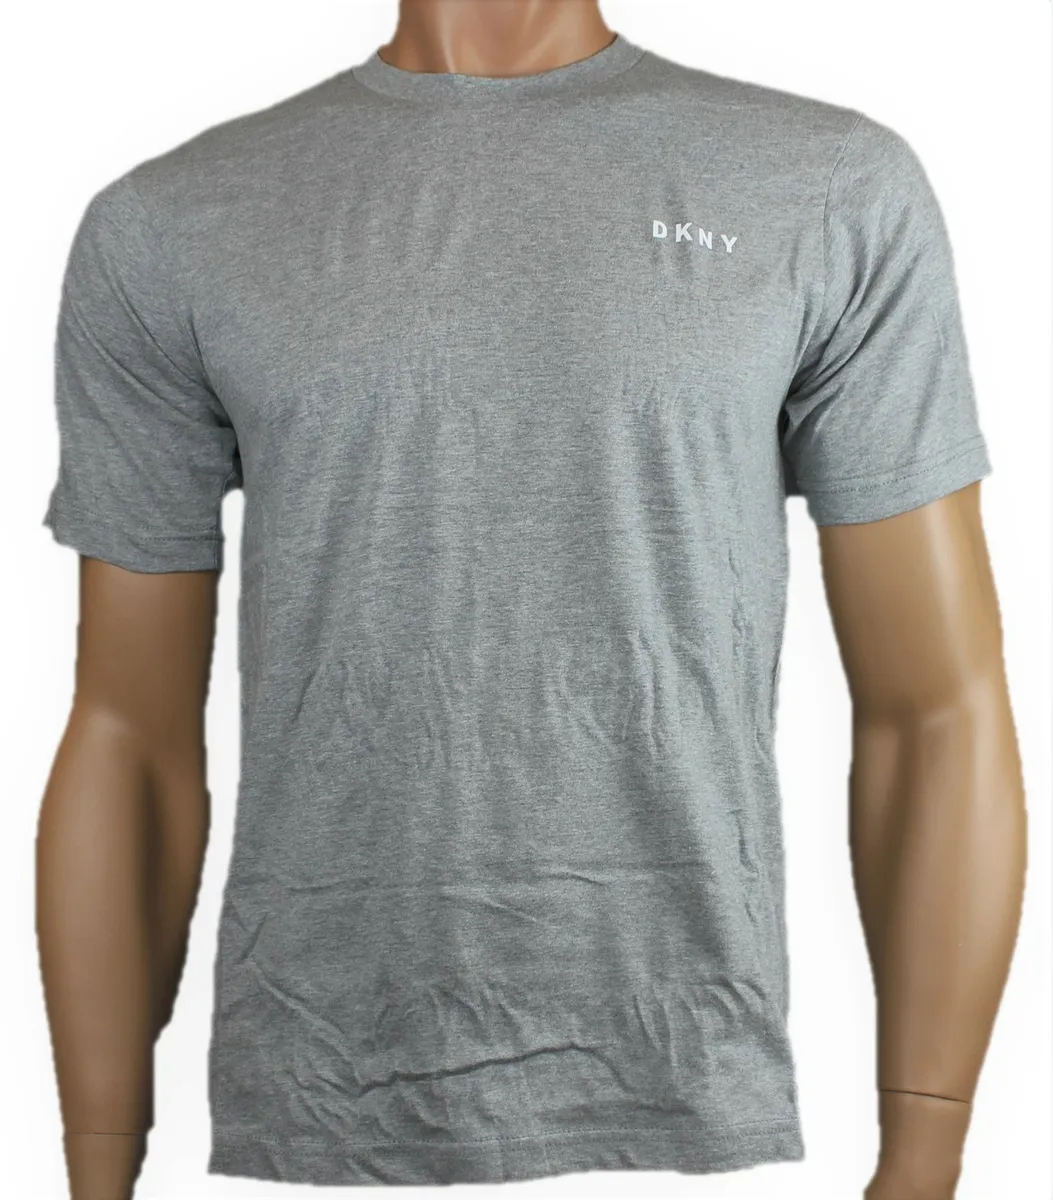 DKNY 3er Pack Herren T-Shirt Giants Größe S - XL Black White Grey NEU | eBay